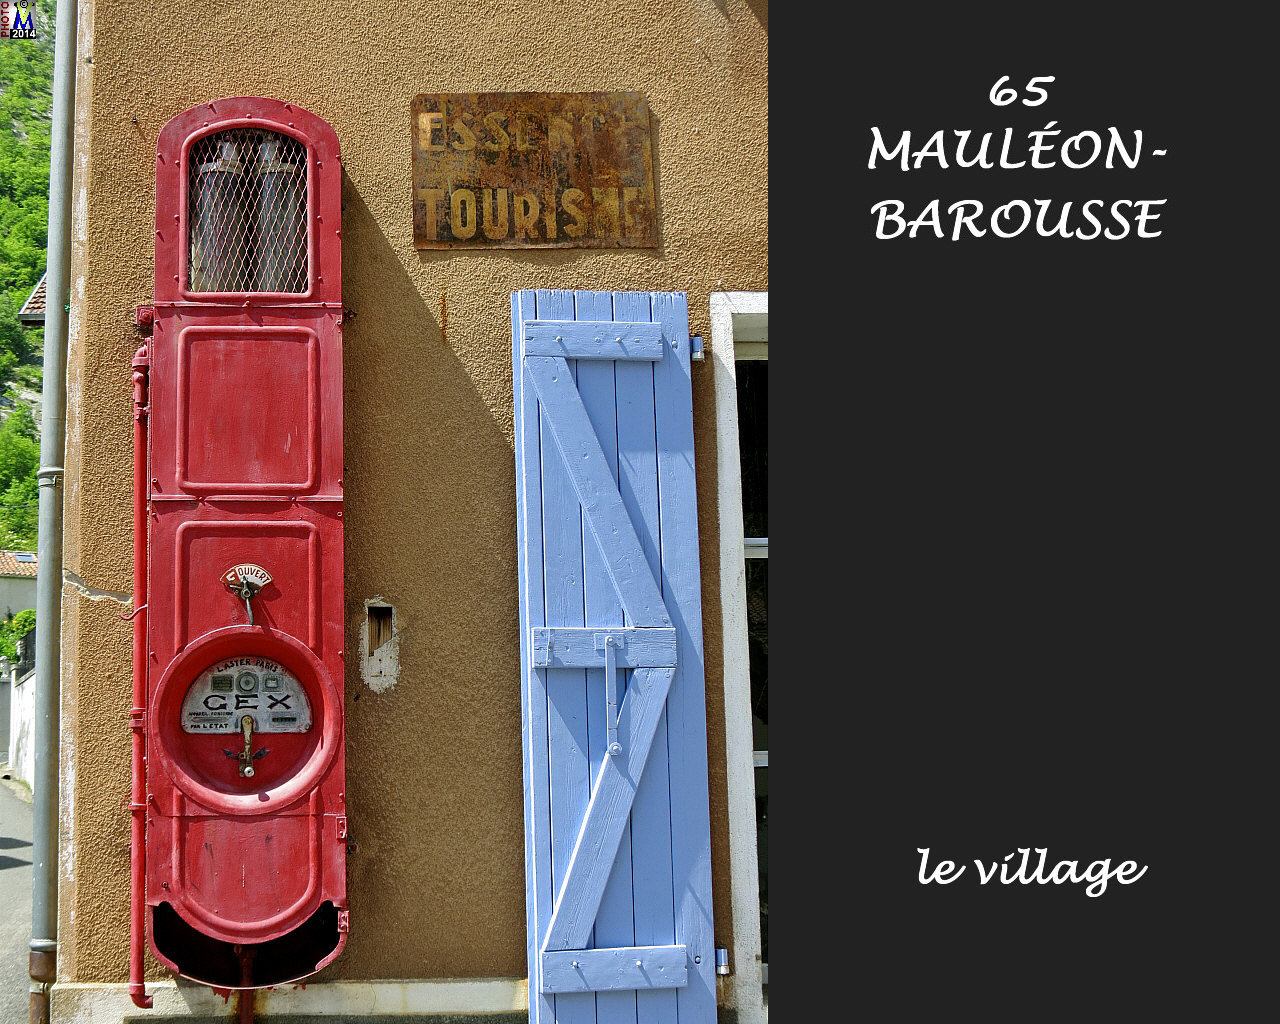 65MAULEON-BAROUSSE_village_108.jpg